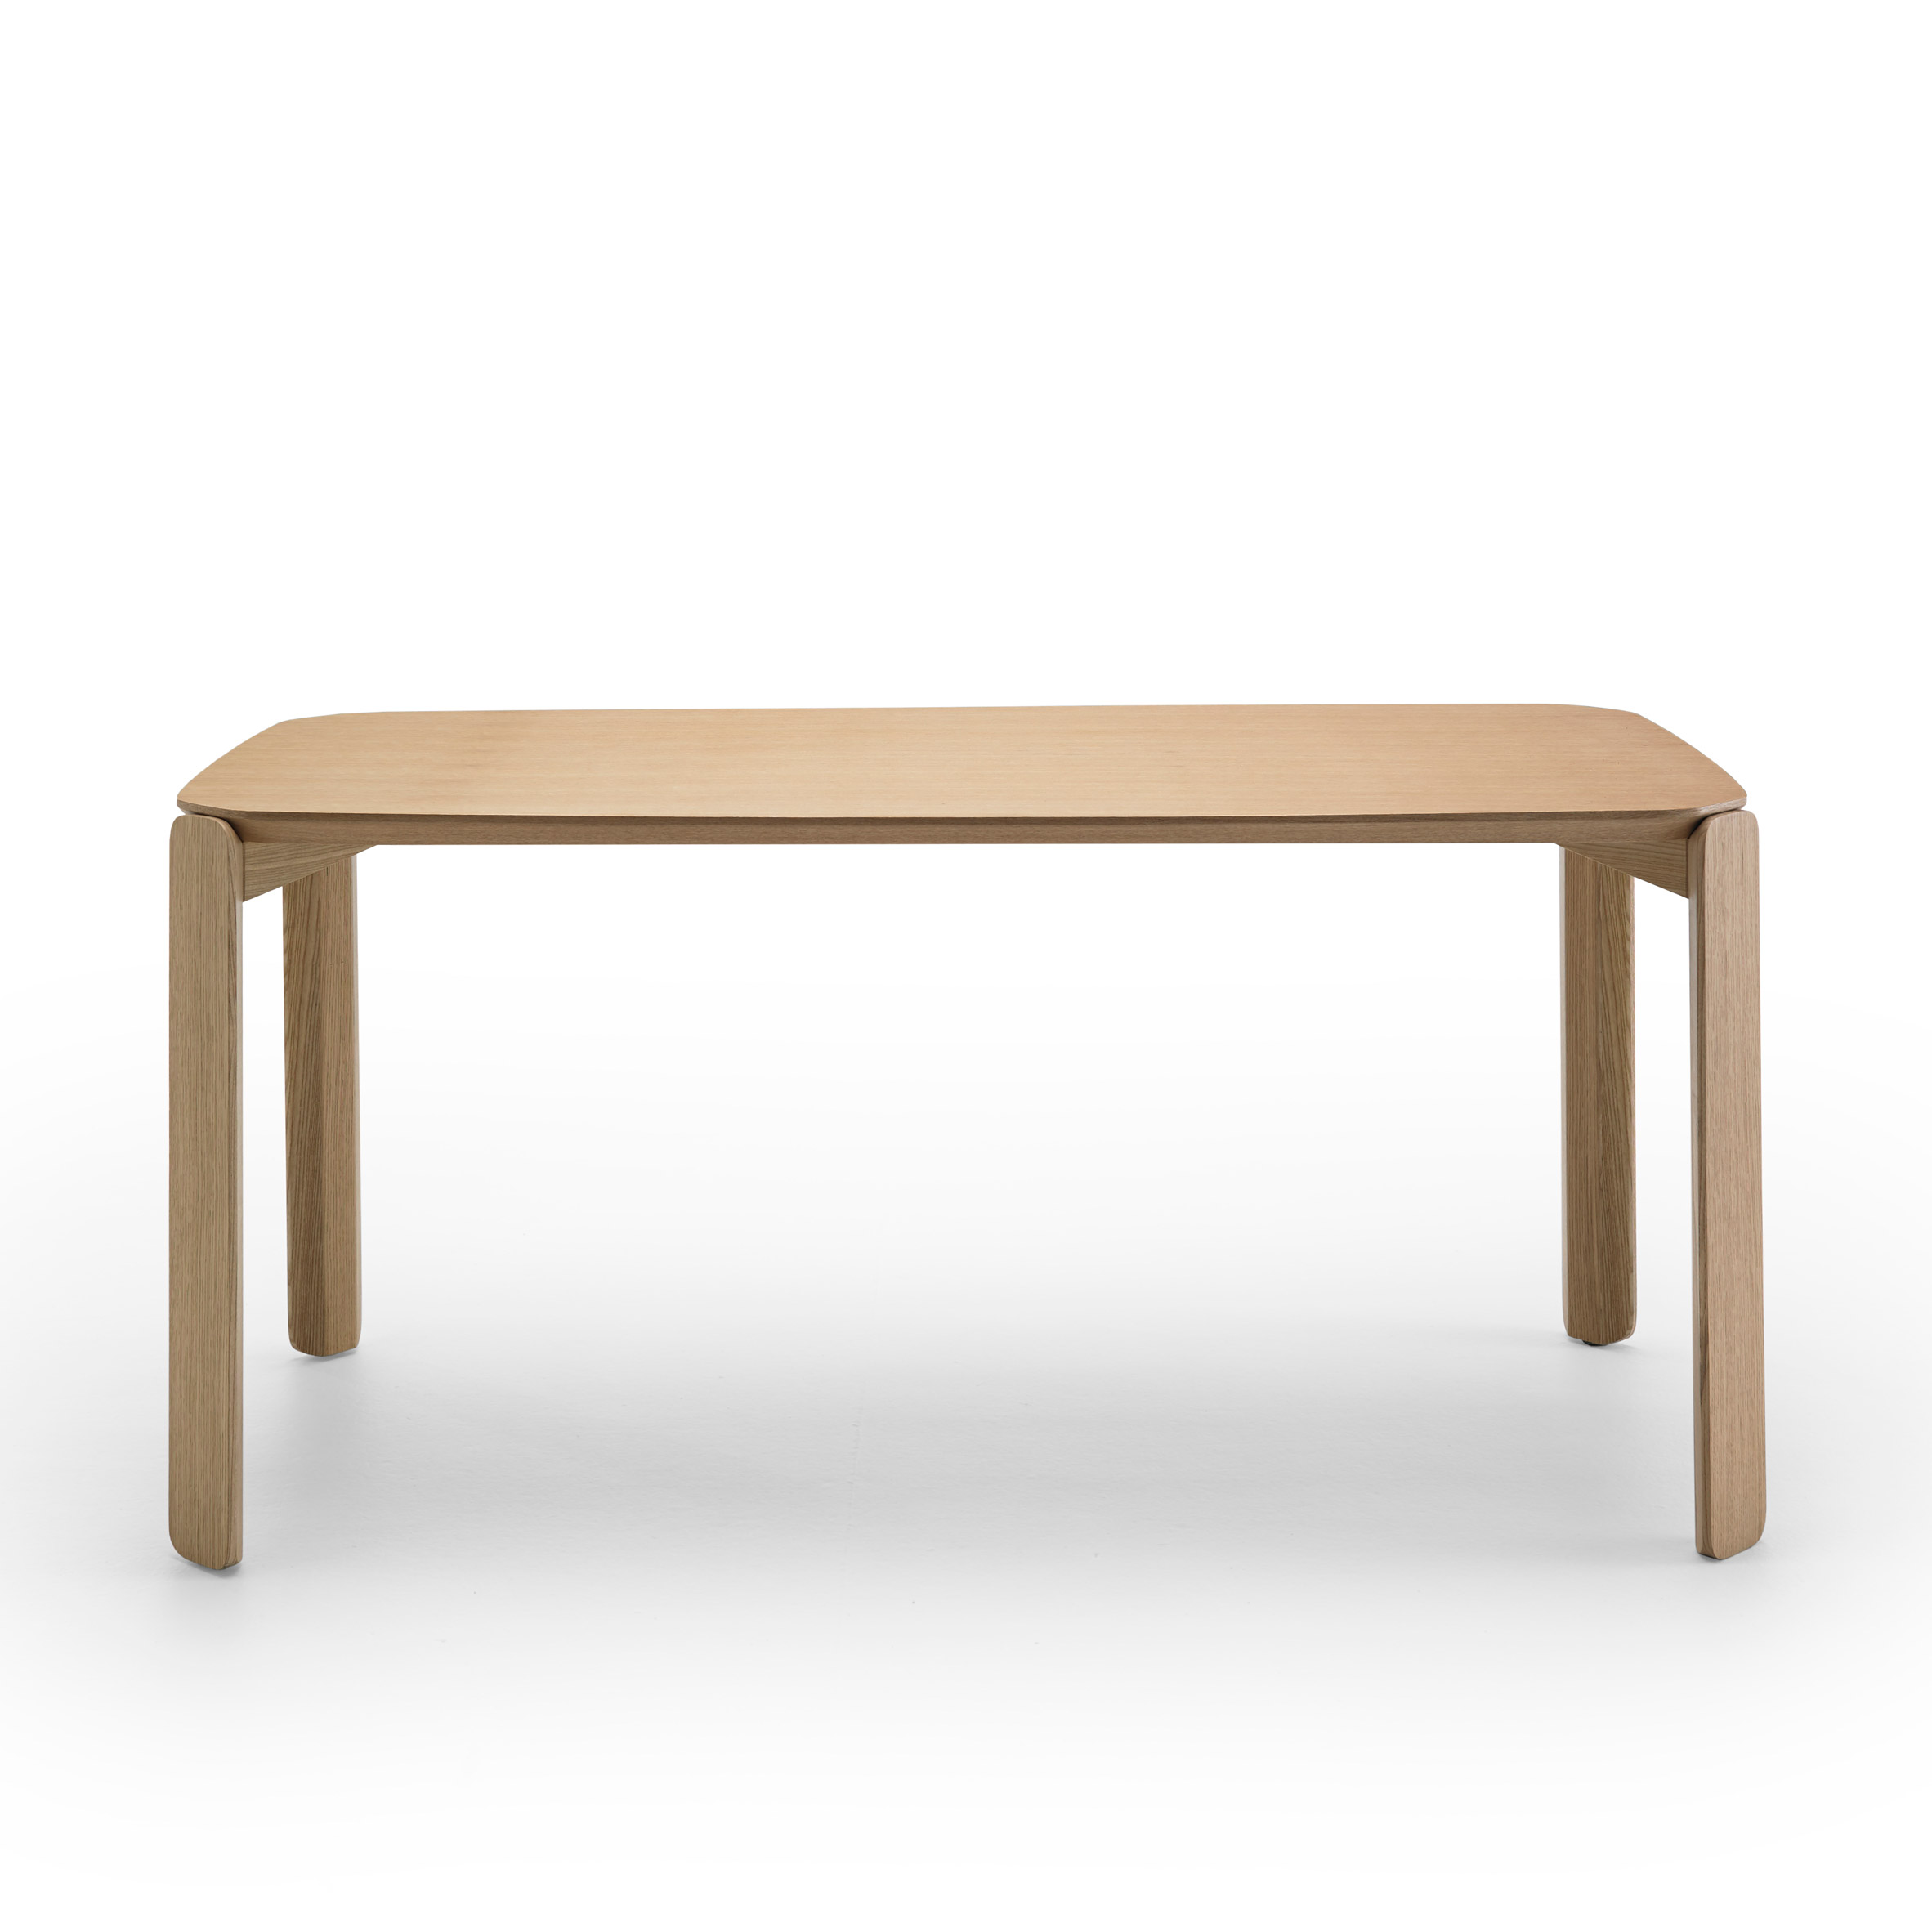 45-table-system-inyard-la-selva-design-furniture_dezeen_2364_col_18